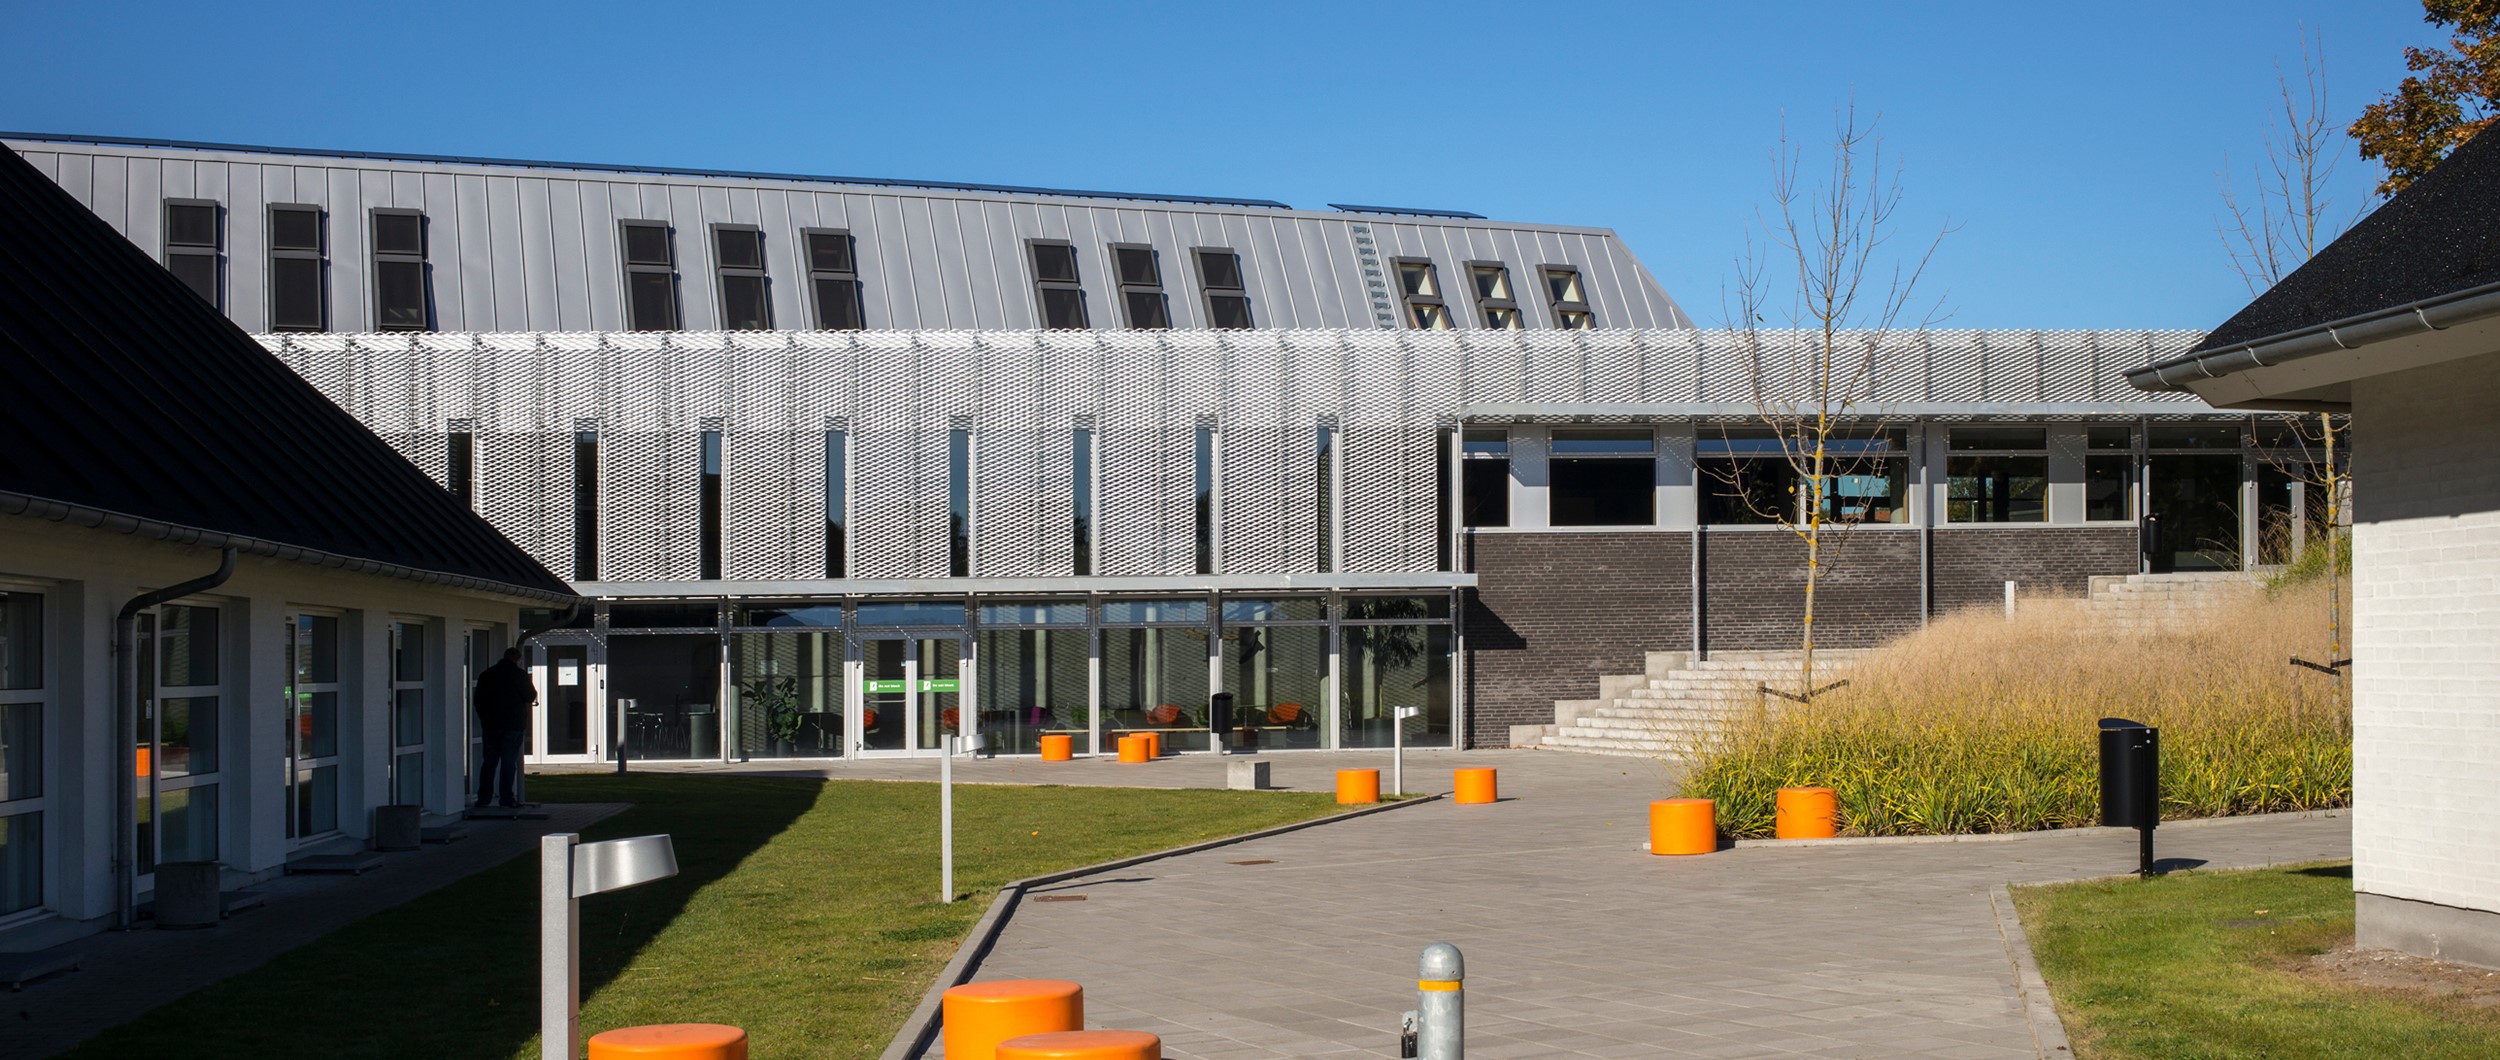 University College Nordjylland - 3200 kvm nybyg og 500 kvm renovering.